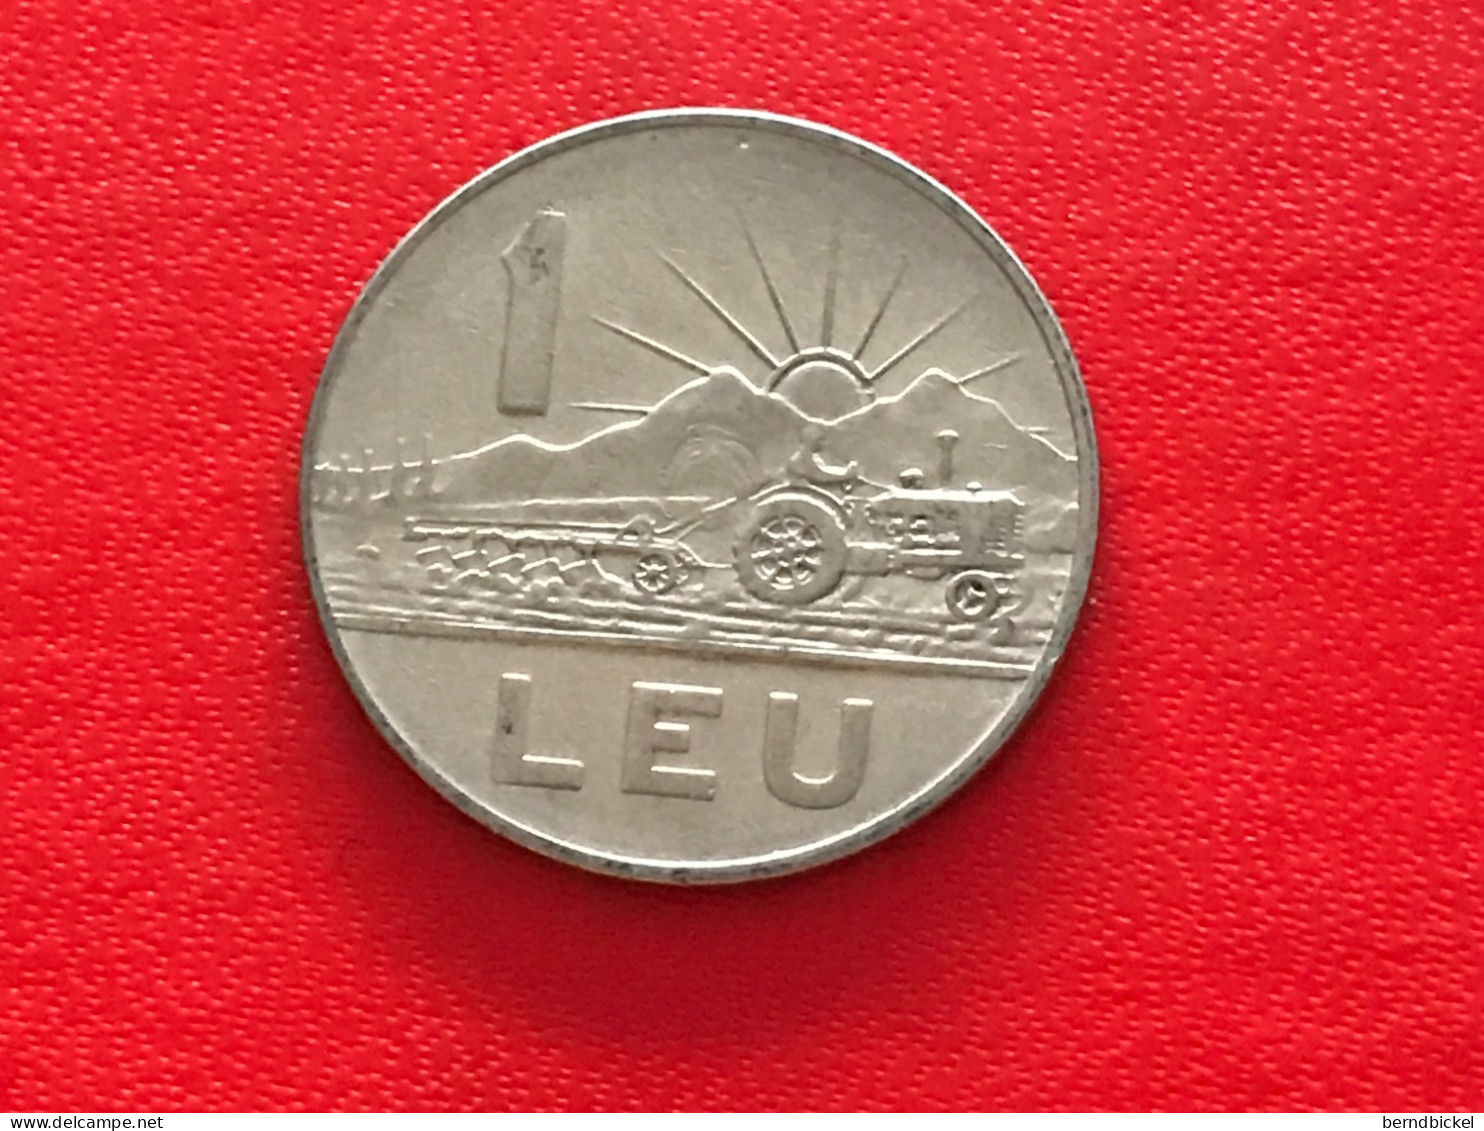 Münze Münzen Umlaufmünze Rumänien 1 Leu 1966 - Romania